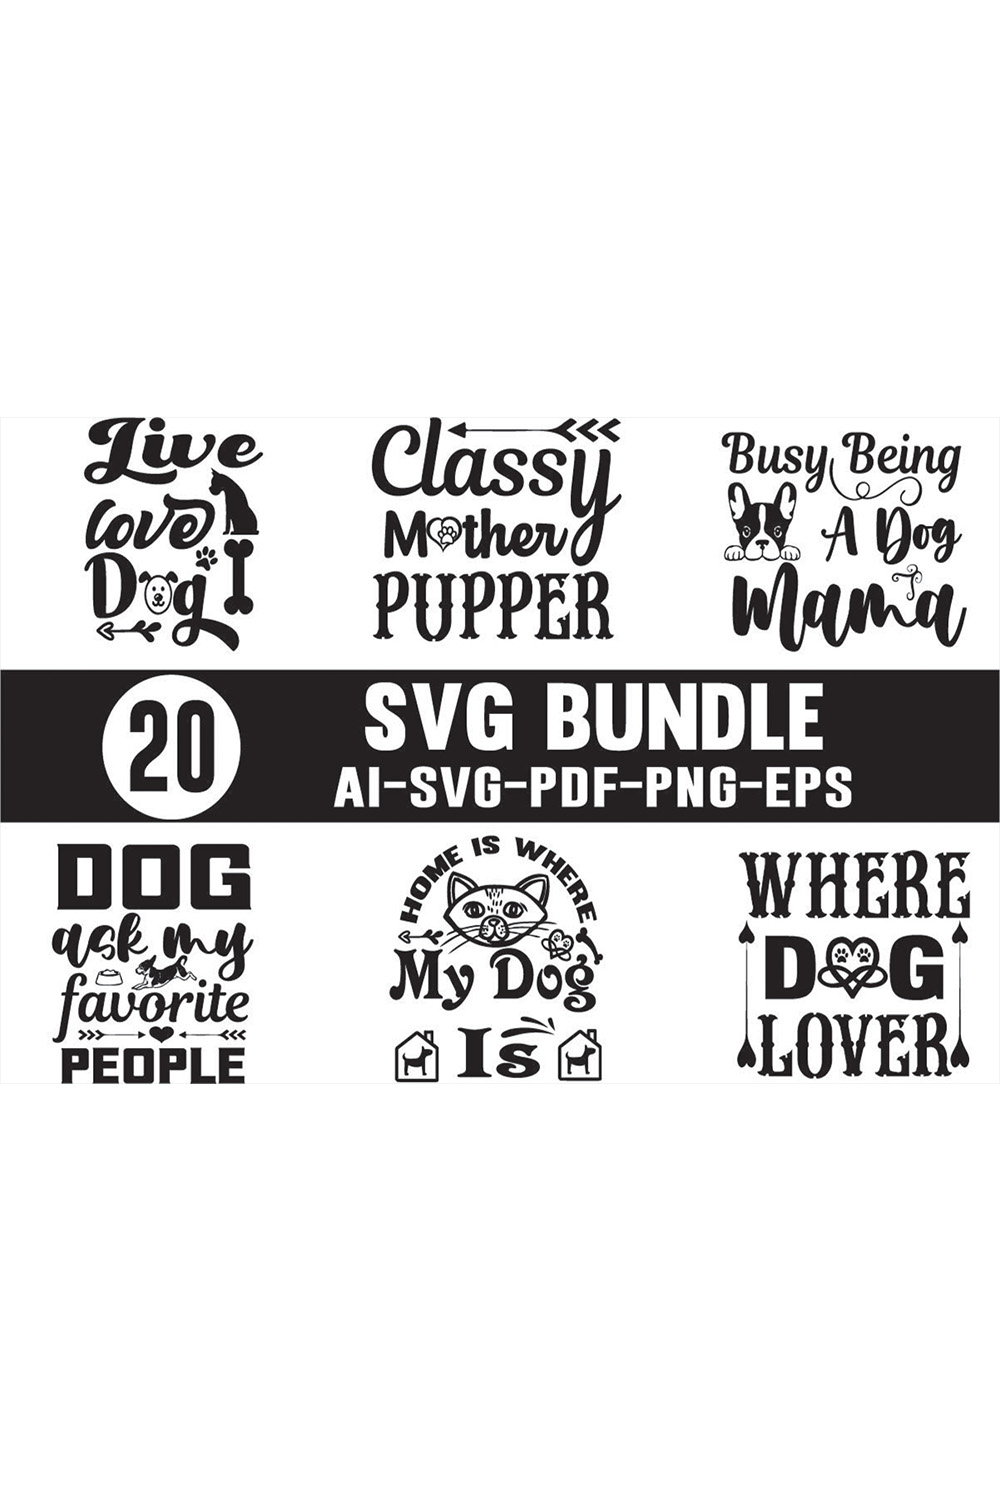 The svg bundle includes 20 different svg font styles.